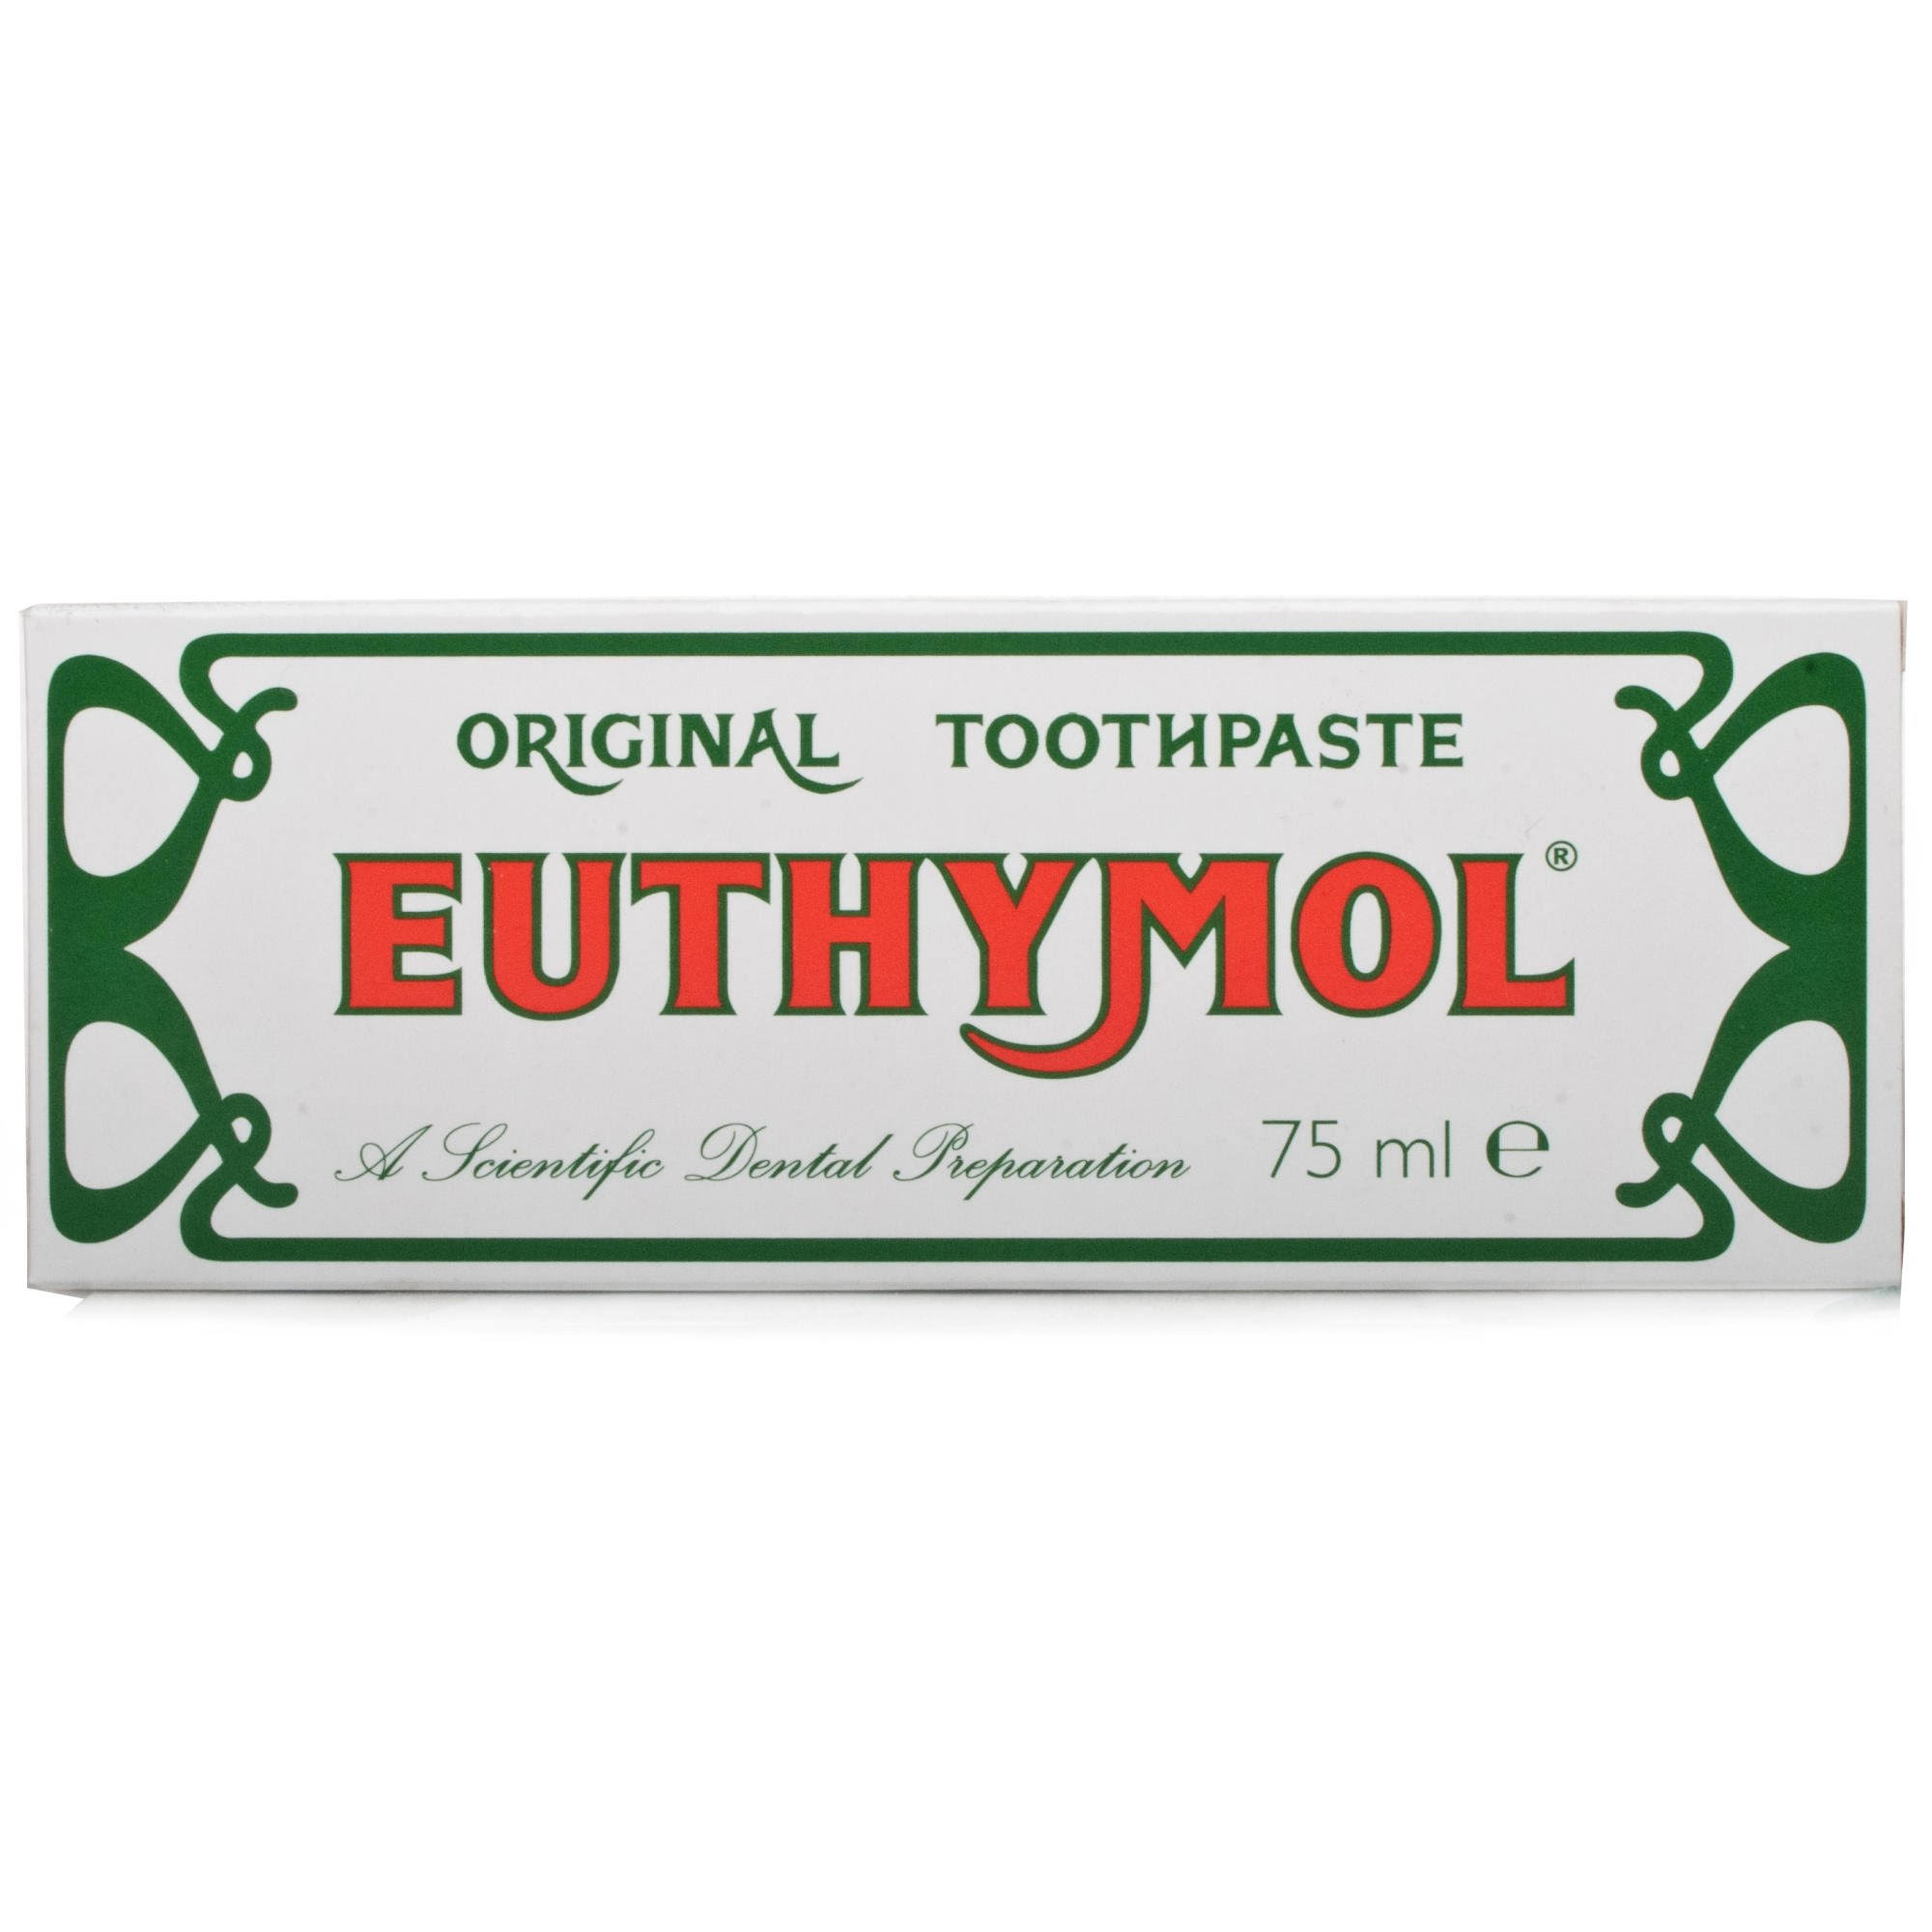 Euthymol Toothpaste 75ml Original